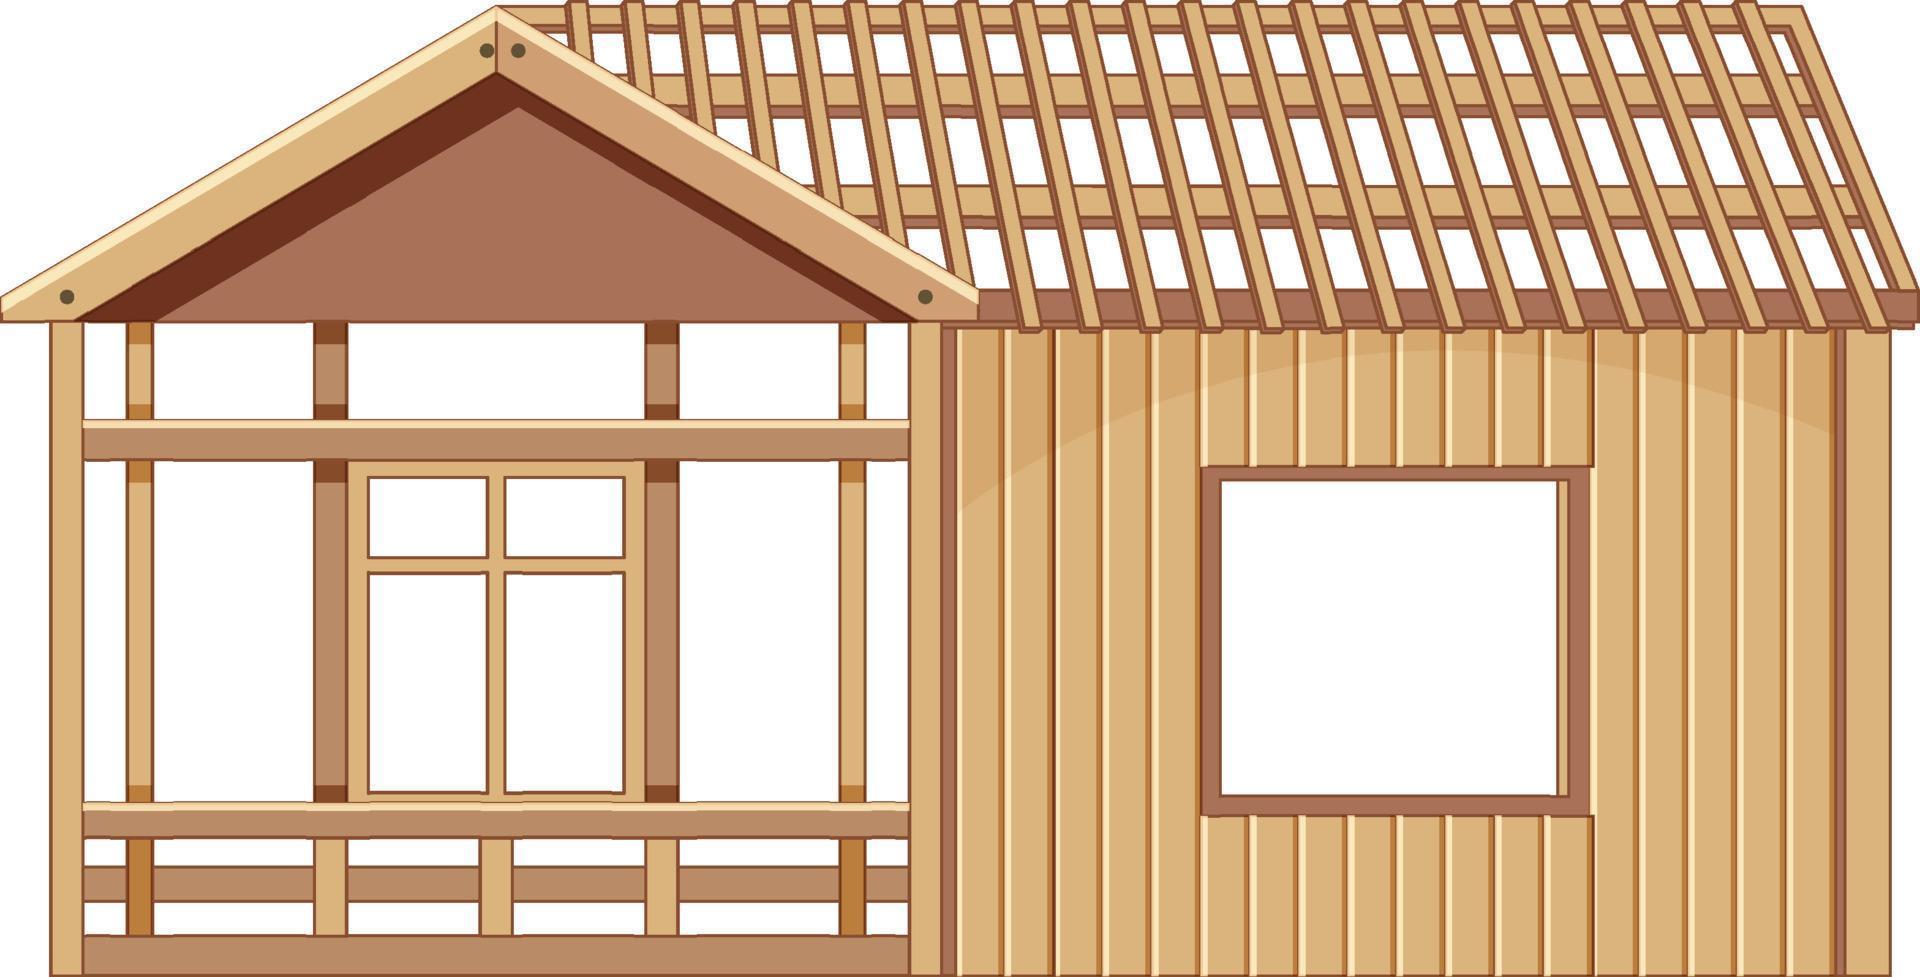 House construction site concept vector